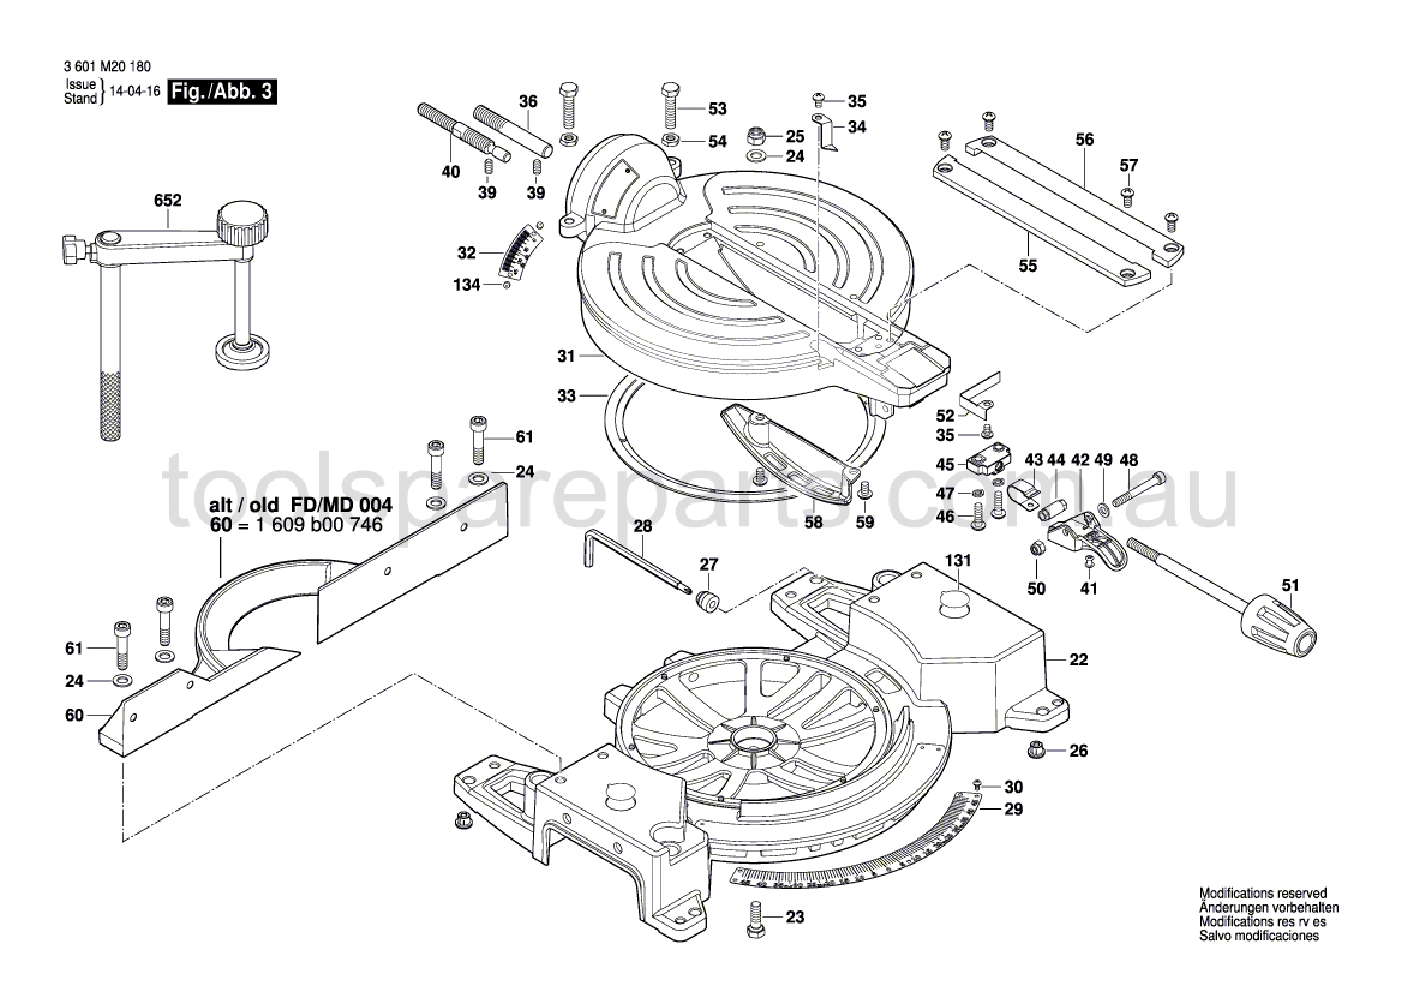 Bosch GCM 10M 3601M20140  Diagram 3